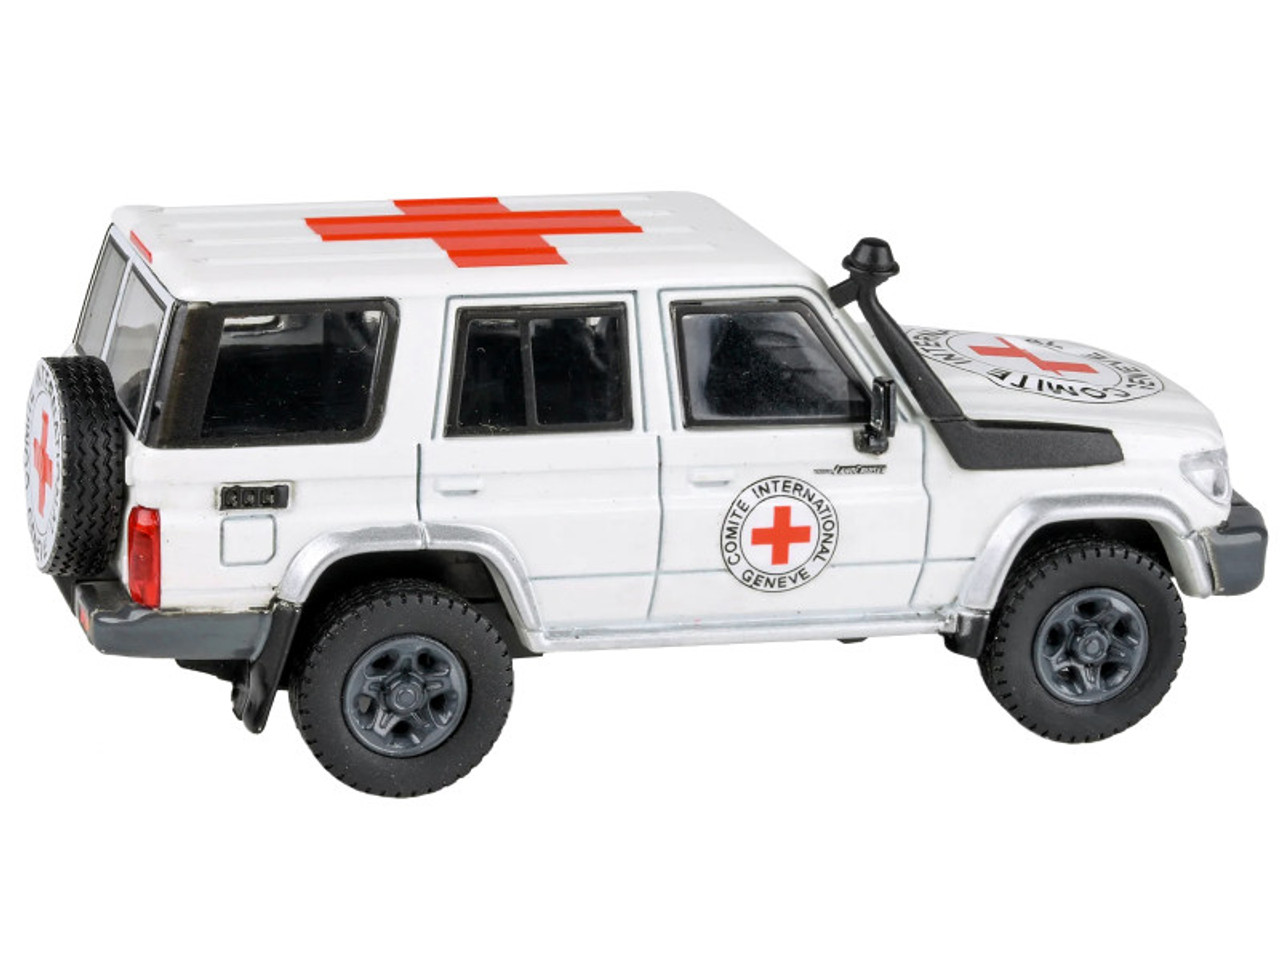 1/64 Paragon Toyota Land Cruiser 76 Red Cross Diecast Car Model